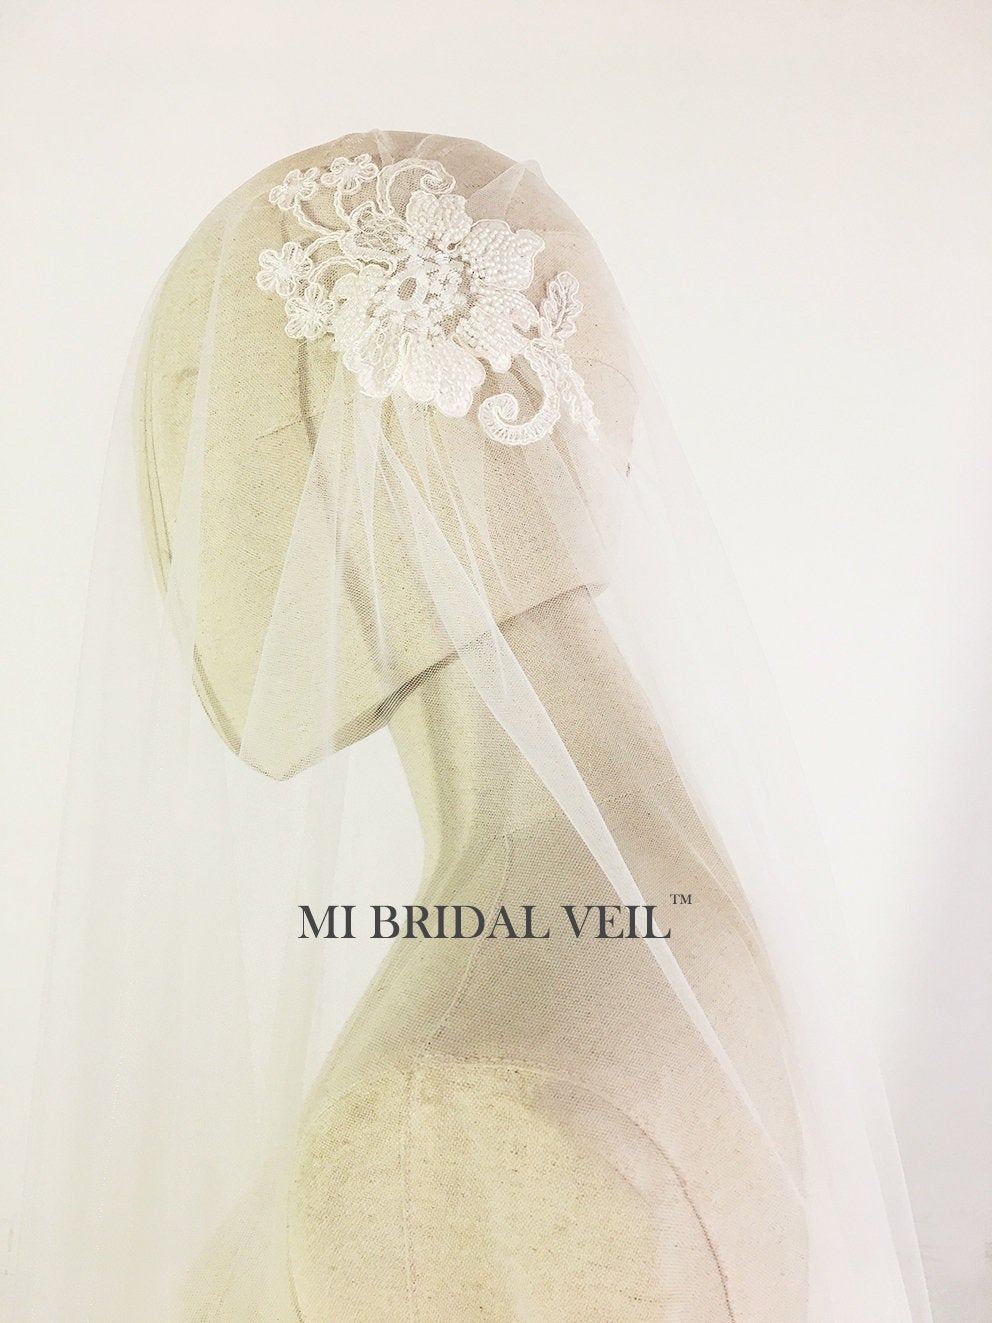 Juliet Cap Veil with Beading, Great Gatsby Wedding Veil, Mi Bridal